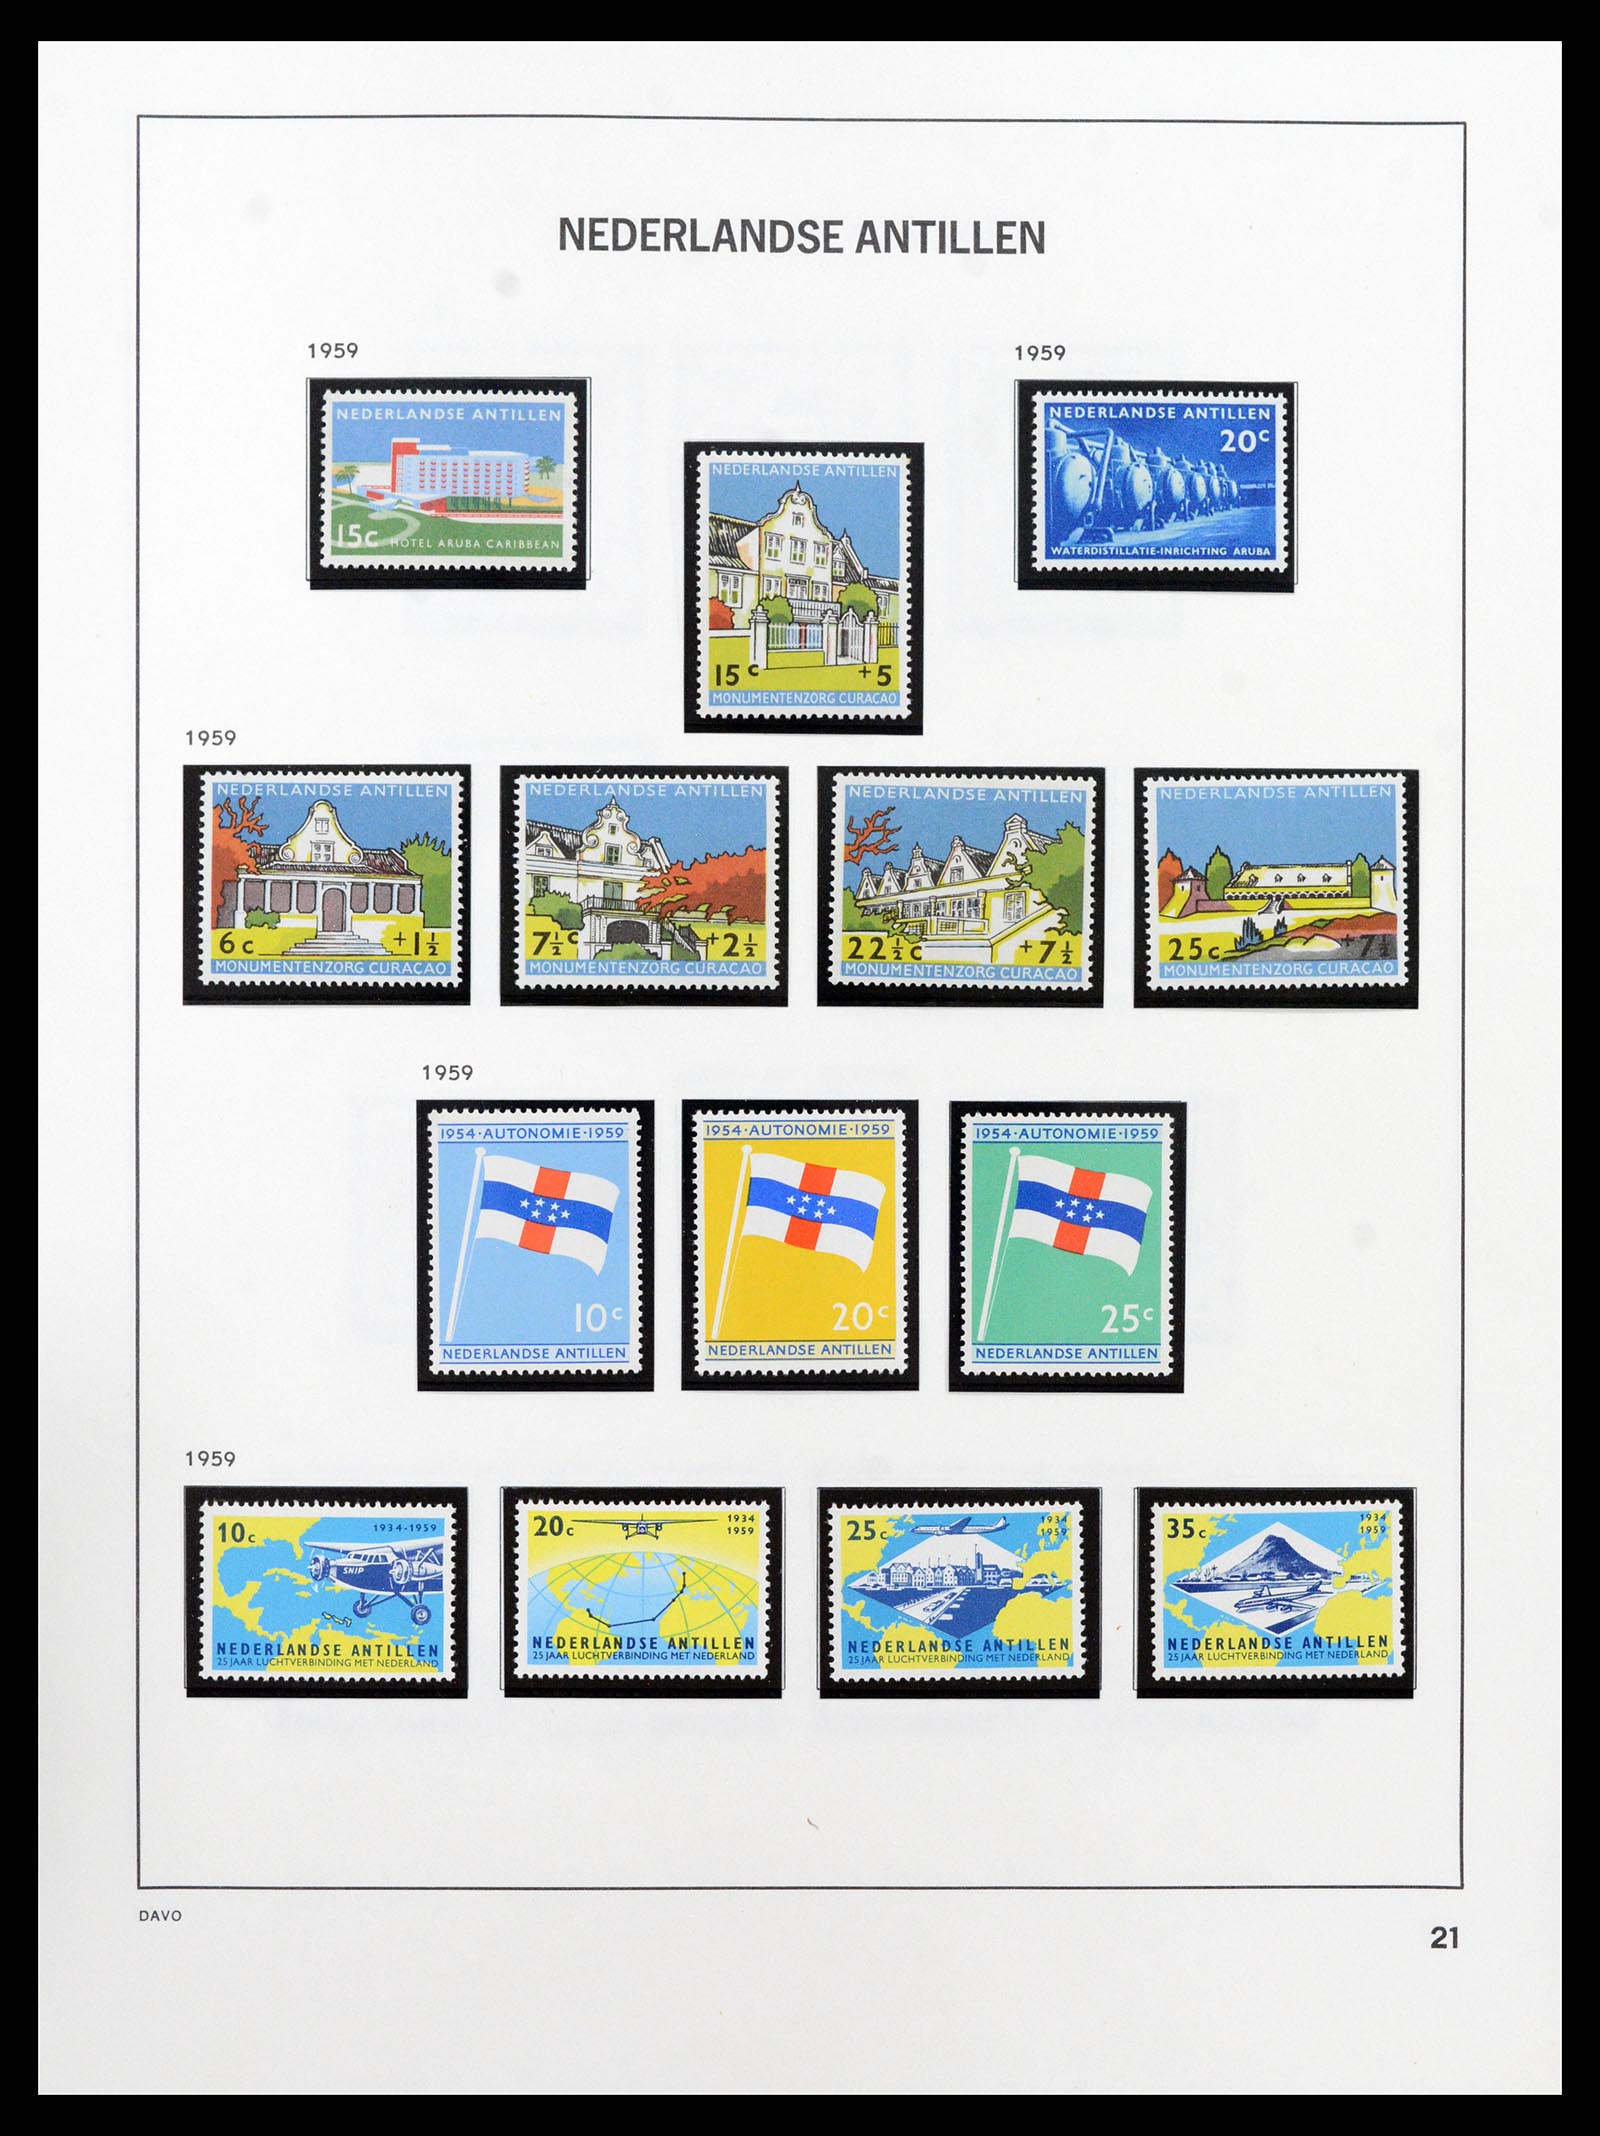 37682 010 - Stamp collection 37682 Netherlands Antilles.